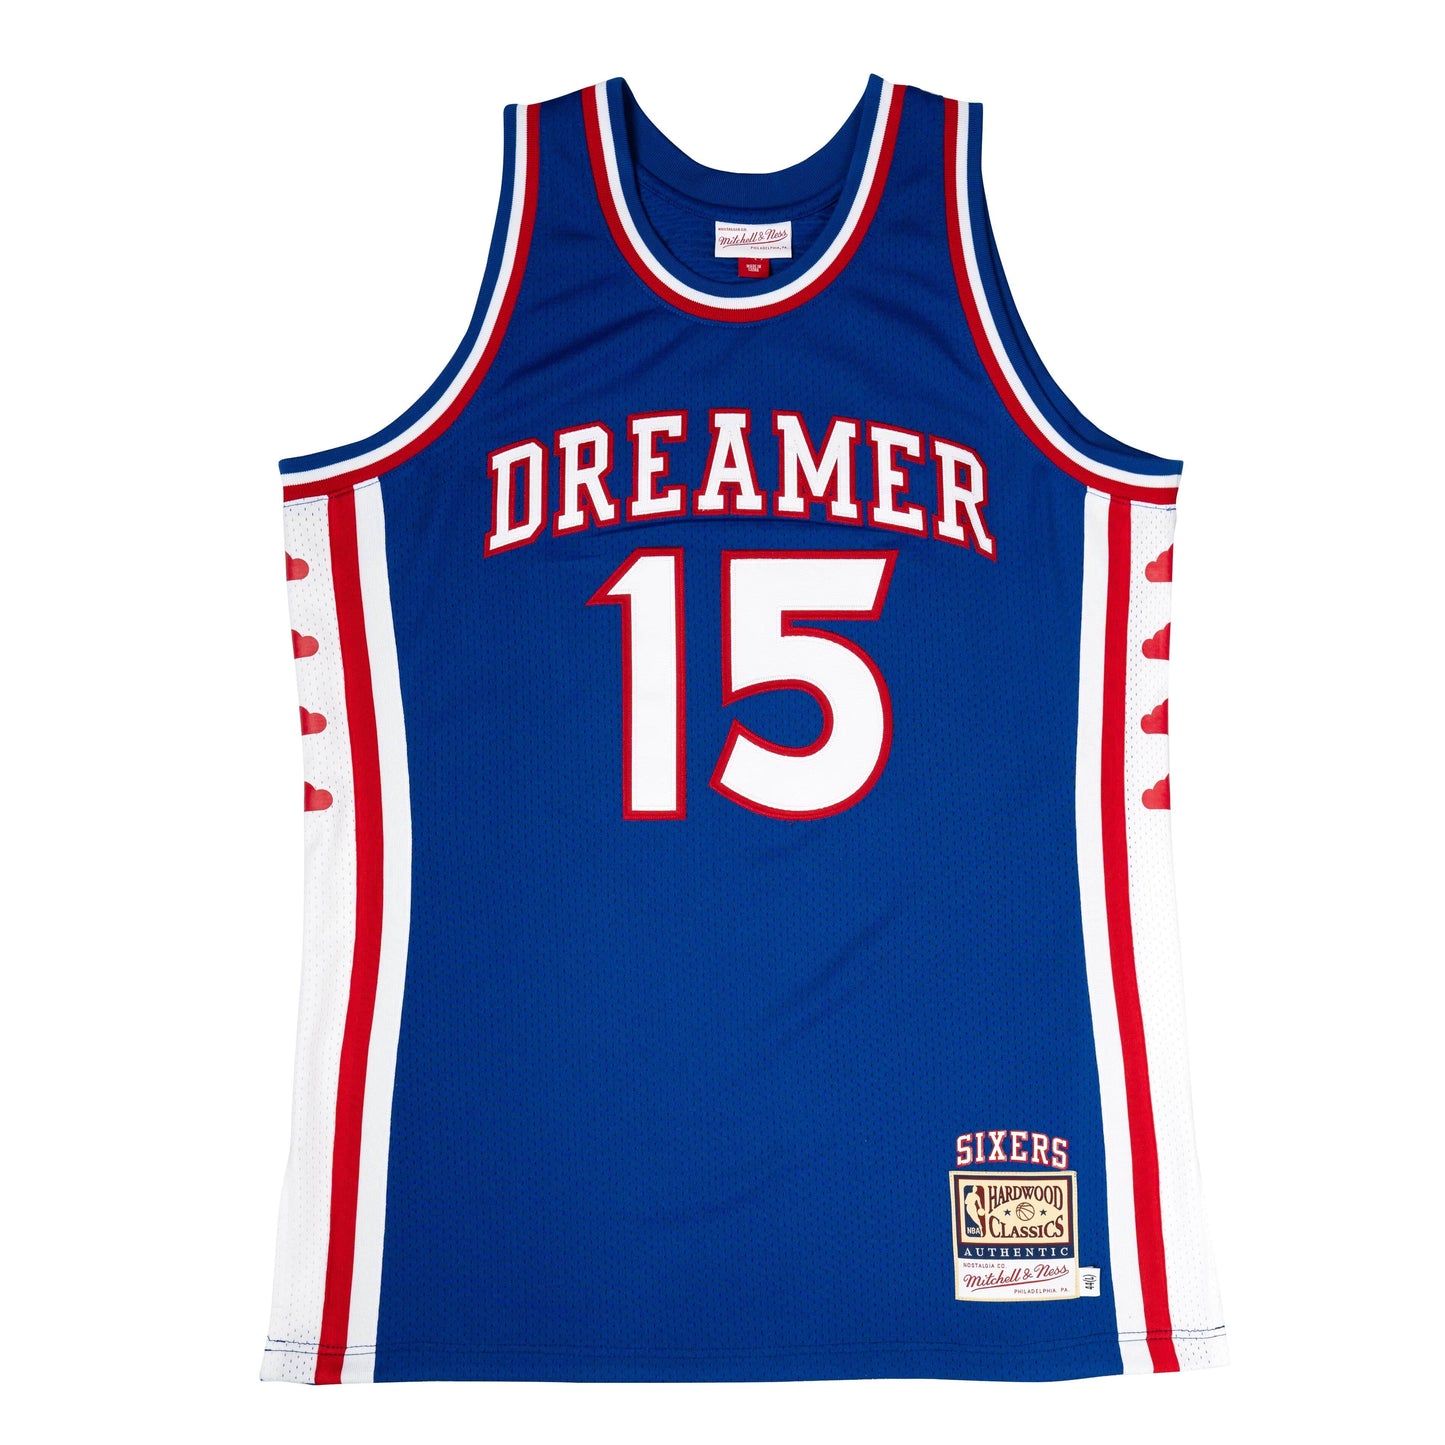 DREAMER x Mitchell &amp; Ness Philadelphia 76ers Jersey